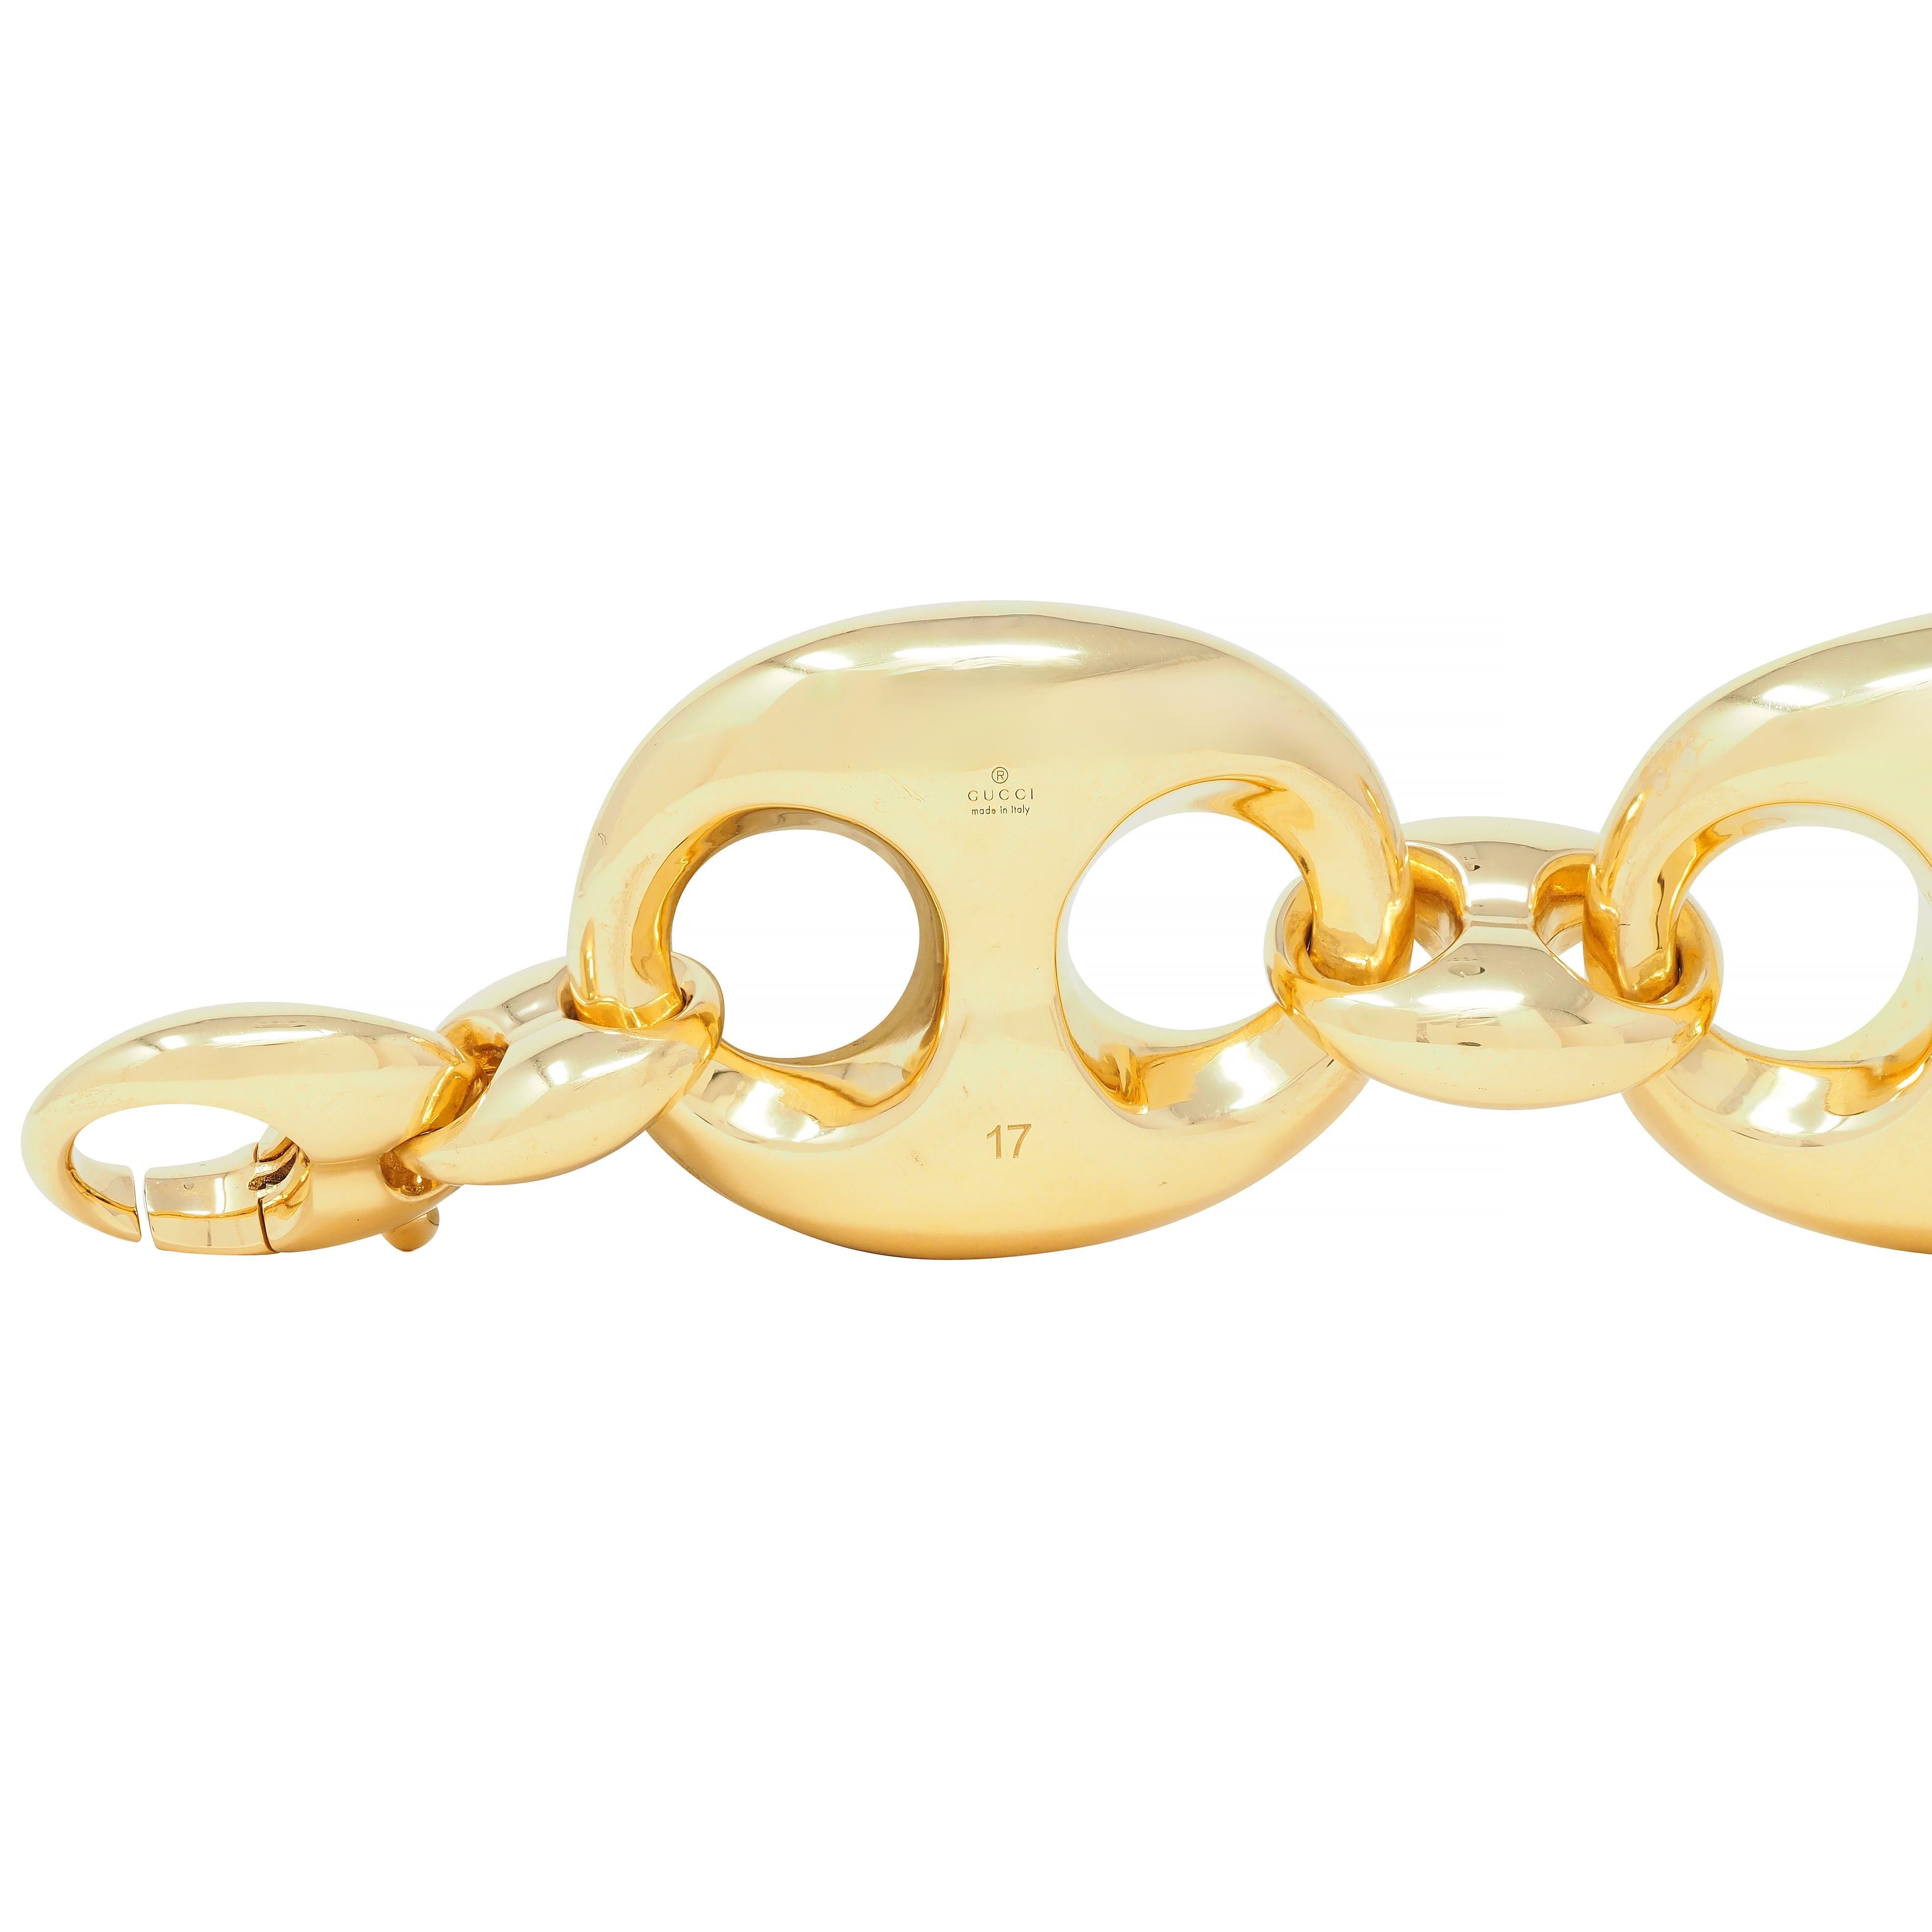 Gucci 2006 18 Karat Yellow Gold Puffed Mariner Link Bracelet For Sale 1